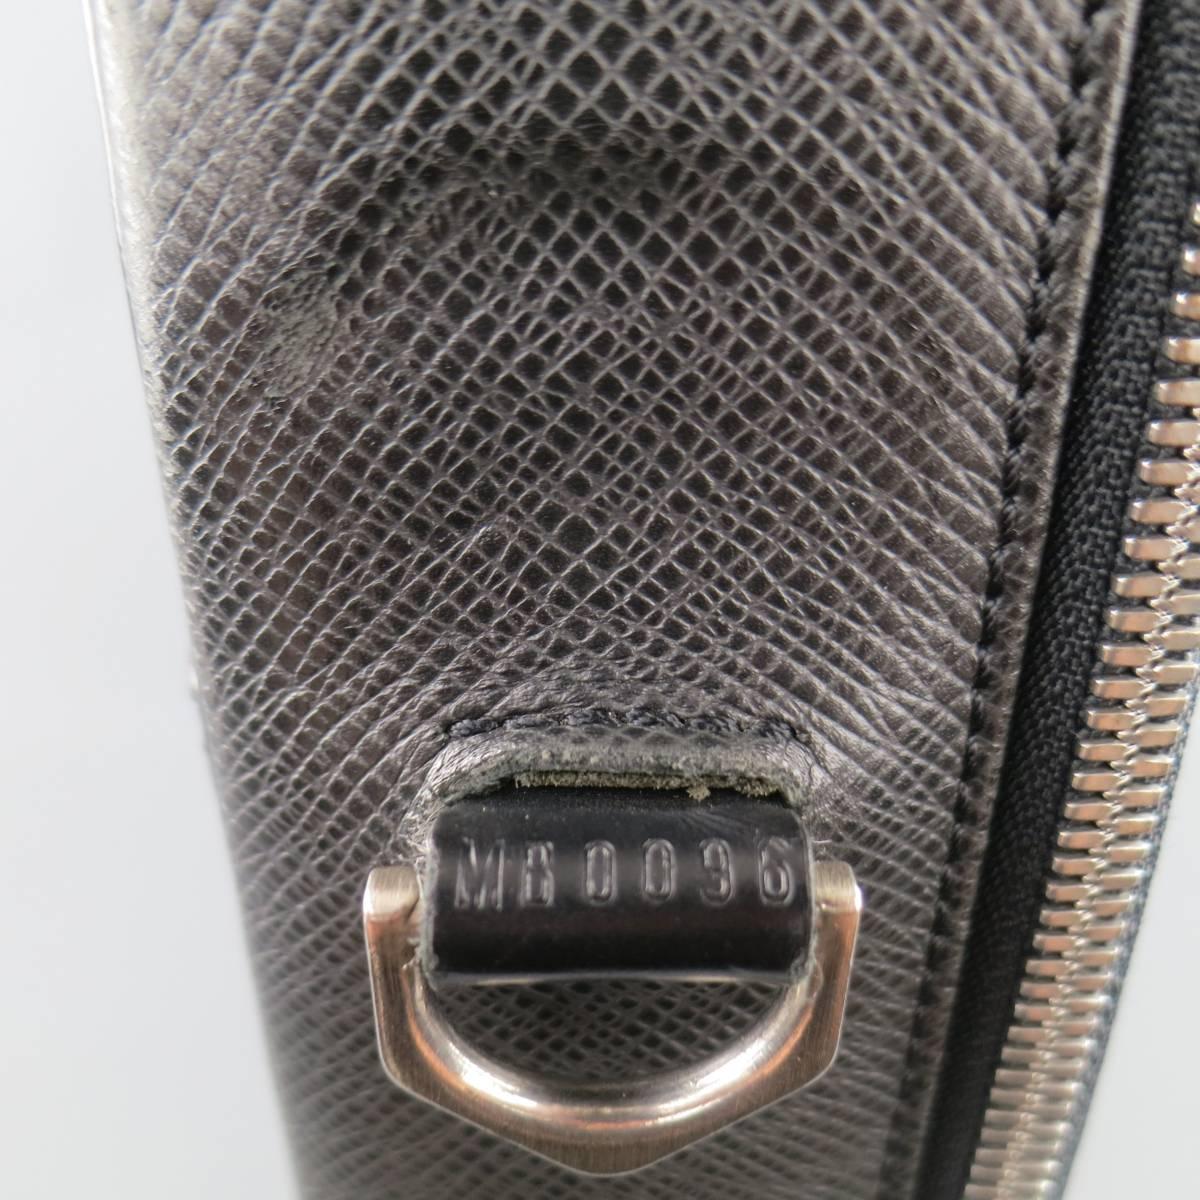 LOUIS VUITTON Briefcase - Black Leather ODESSA ARDOISE Computer LV Bag 2